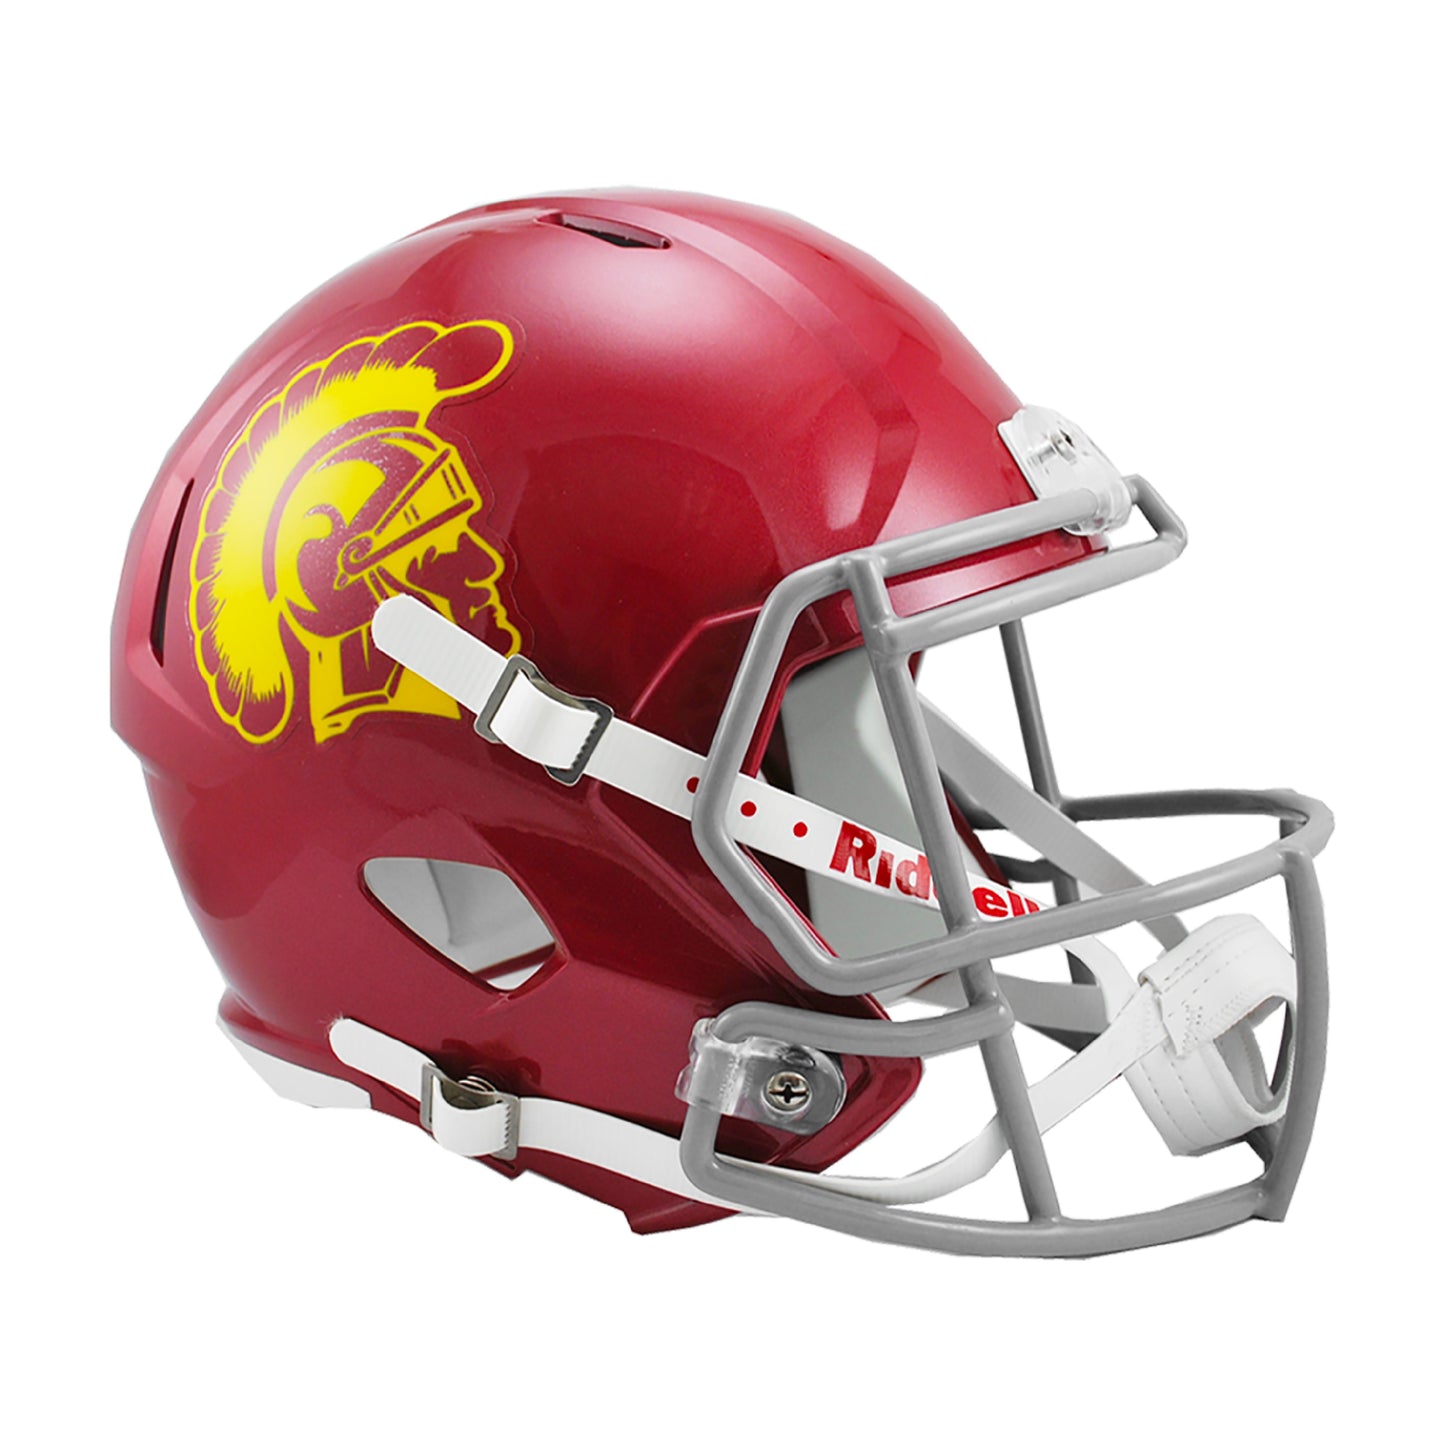 USC Trojans Riddell Speed Full Size Replica Football Helmet